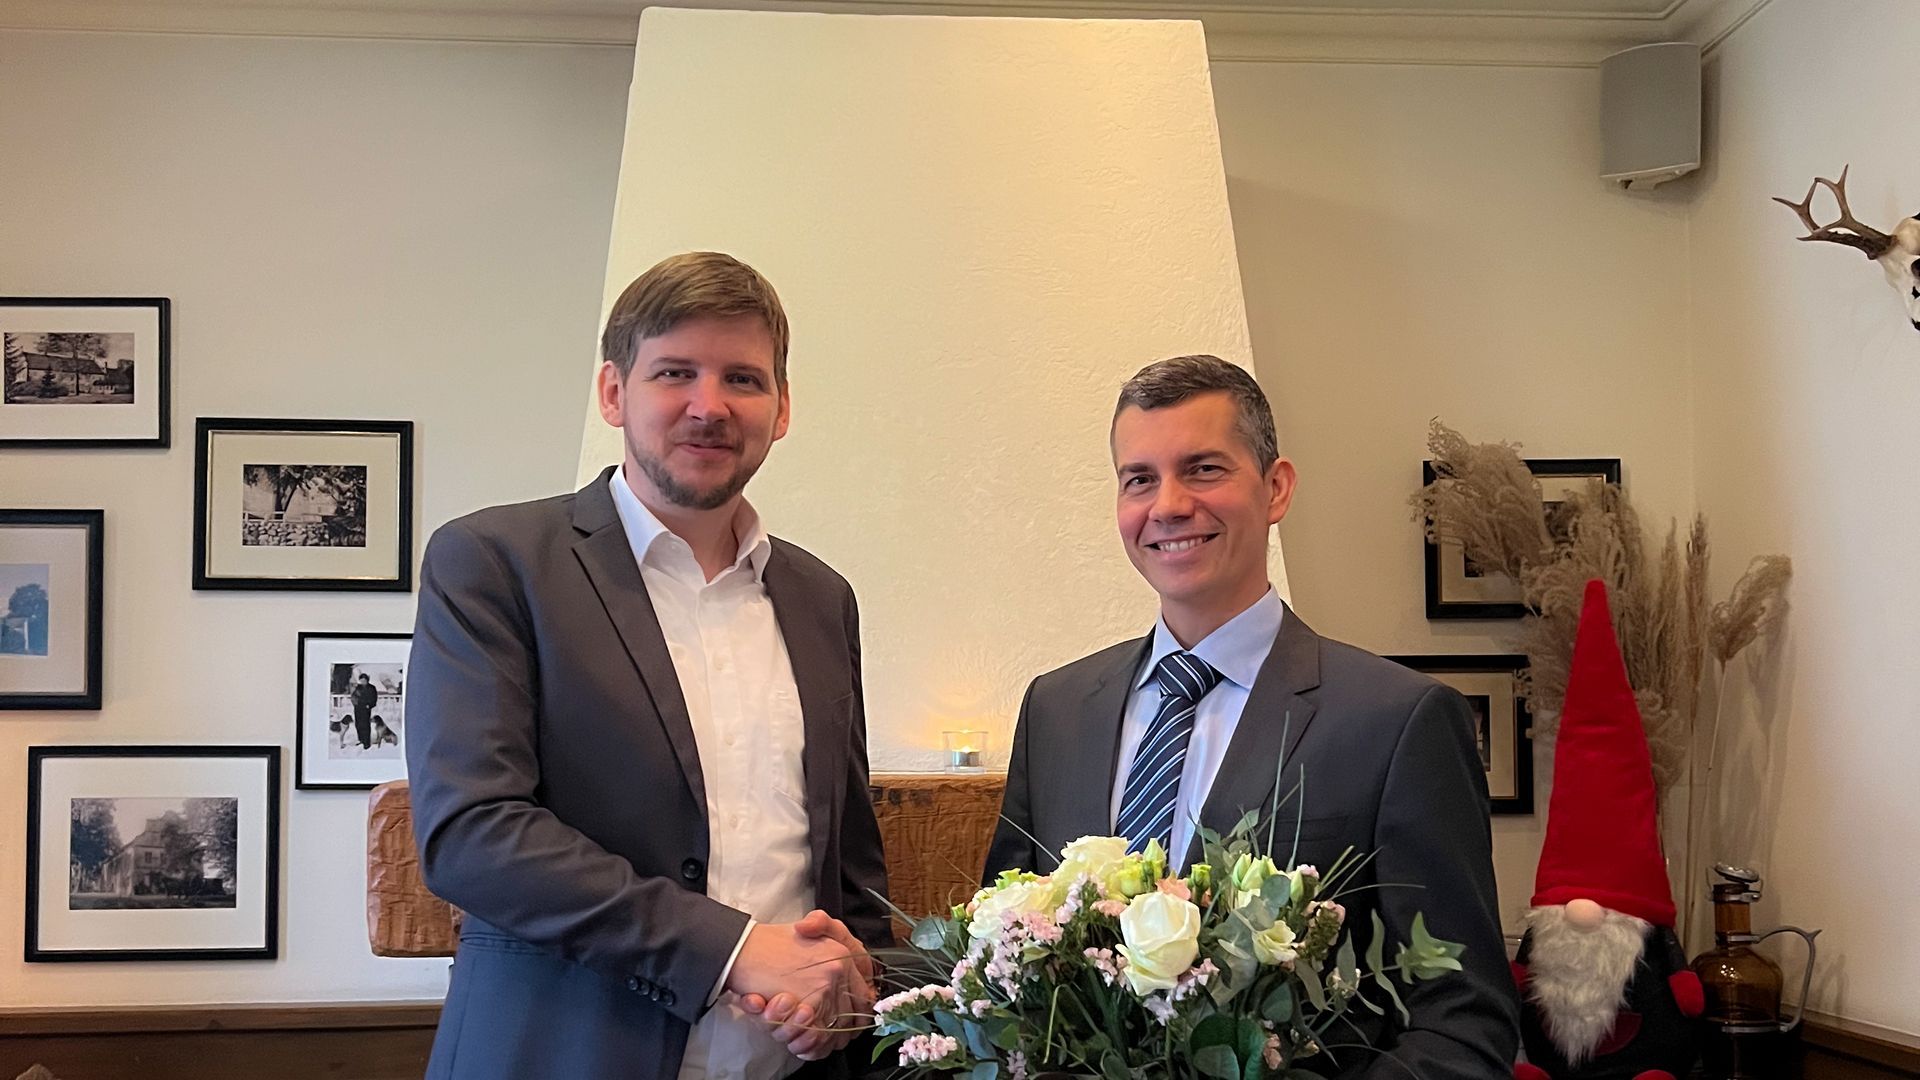 Geschäftsführer Christian Fox begrüßt den neuen Geschäftsführer Stefan Hänel im Kaminzimmer.